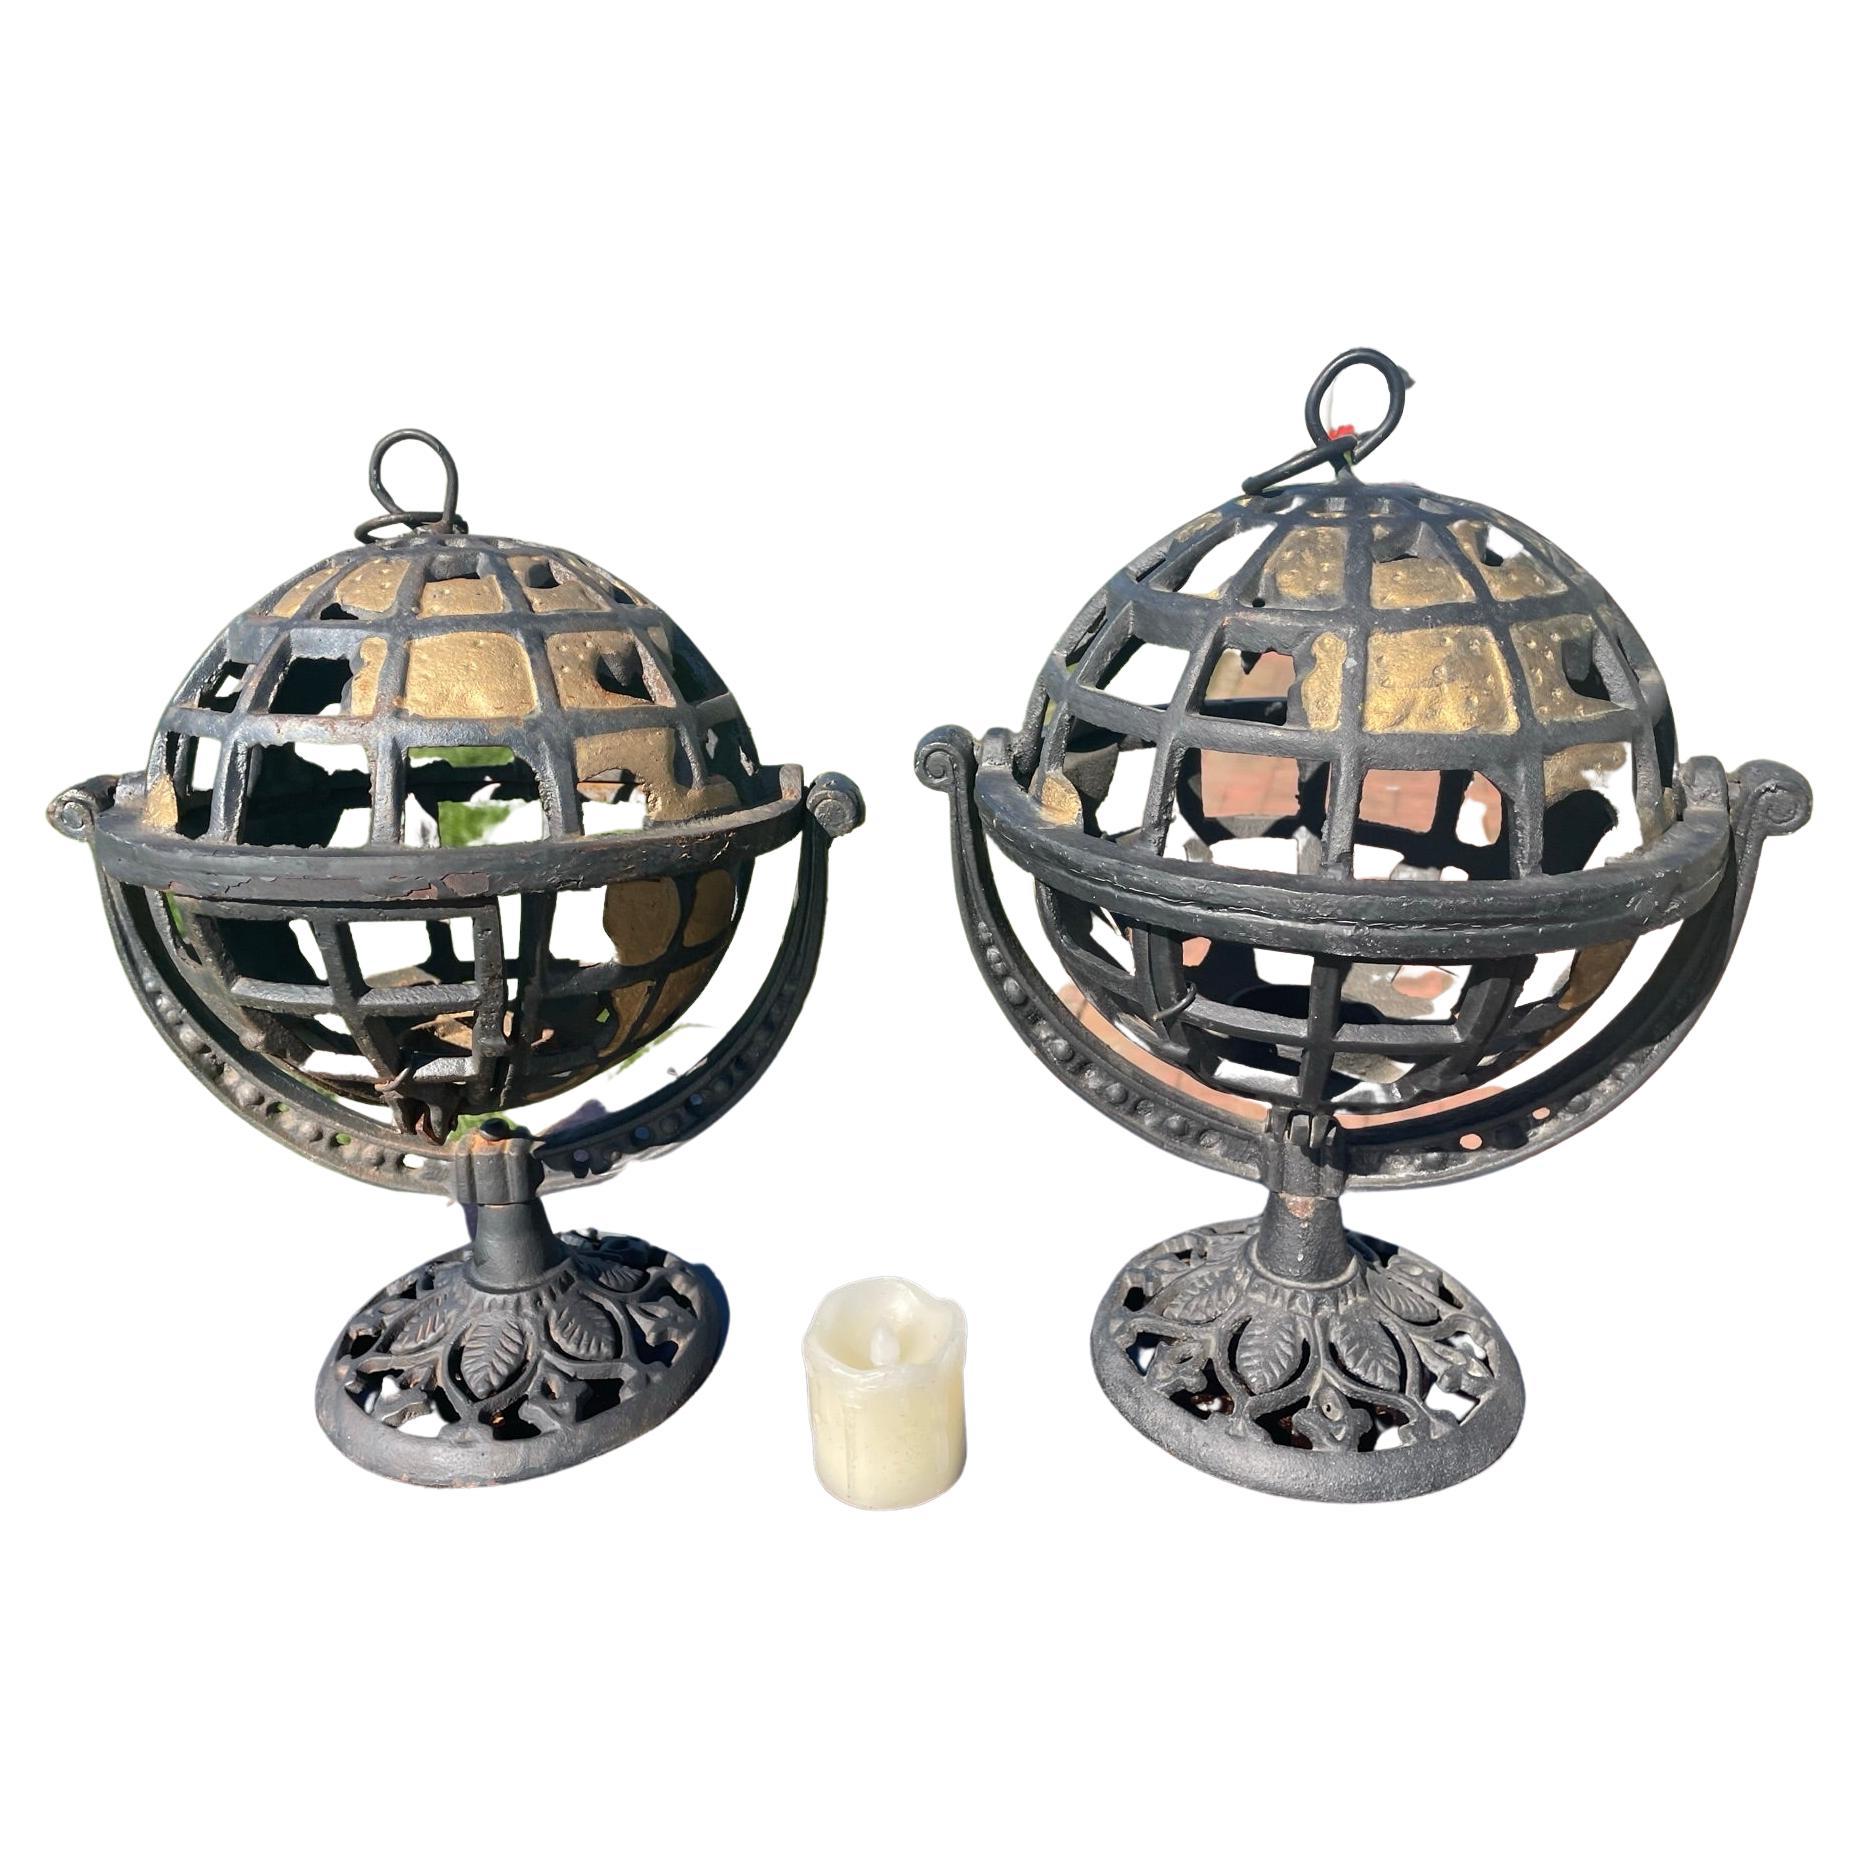 Japanese Rare Pair Old World Globe Lighting Lanterns For Sale